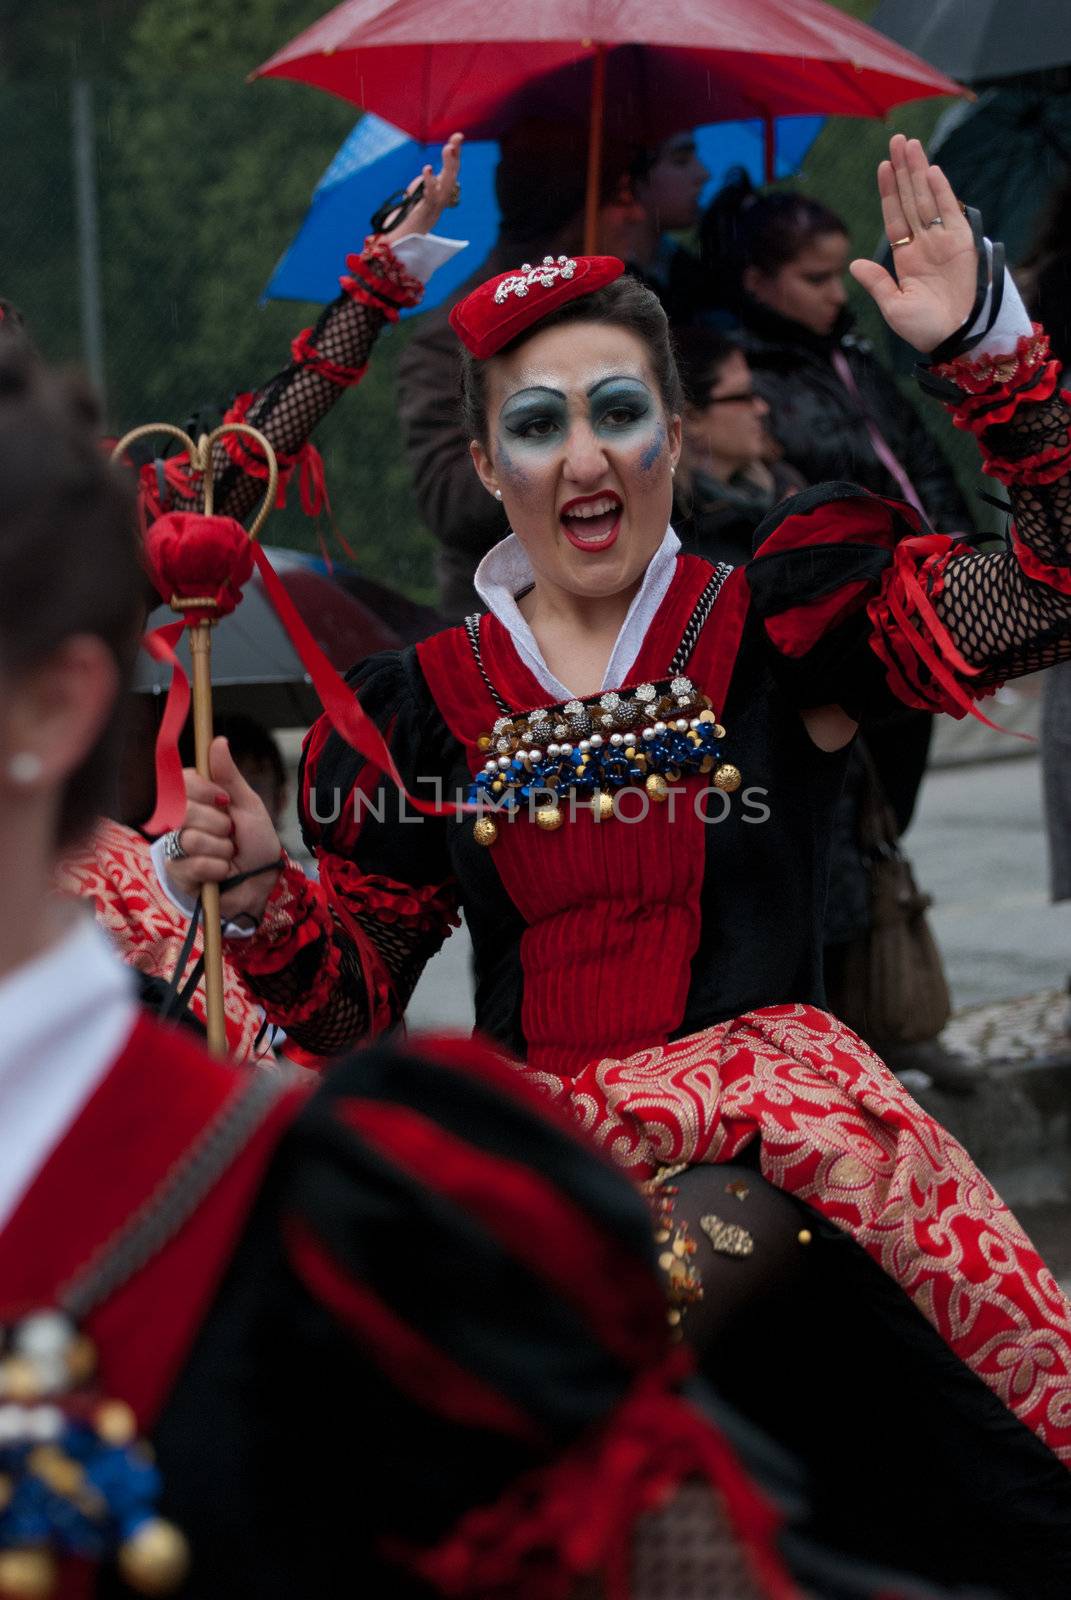 Carnaval de Ovar, Portugal by homydesign